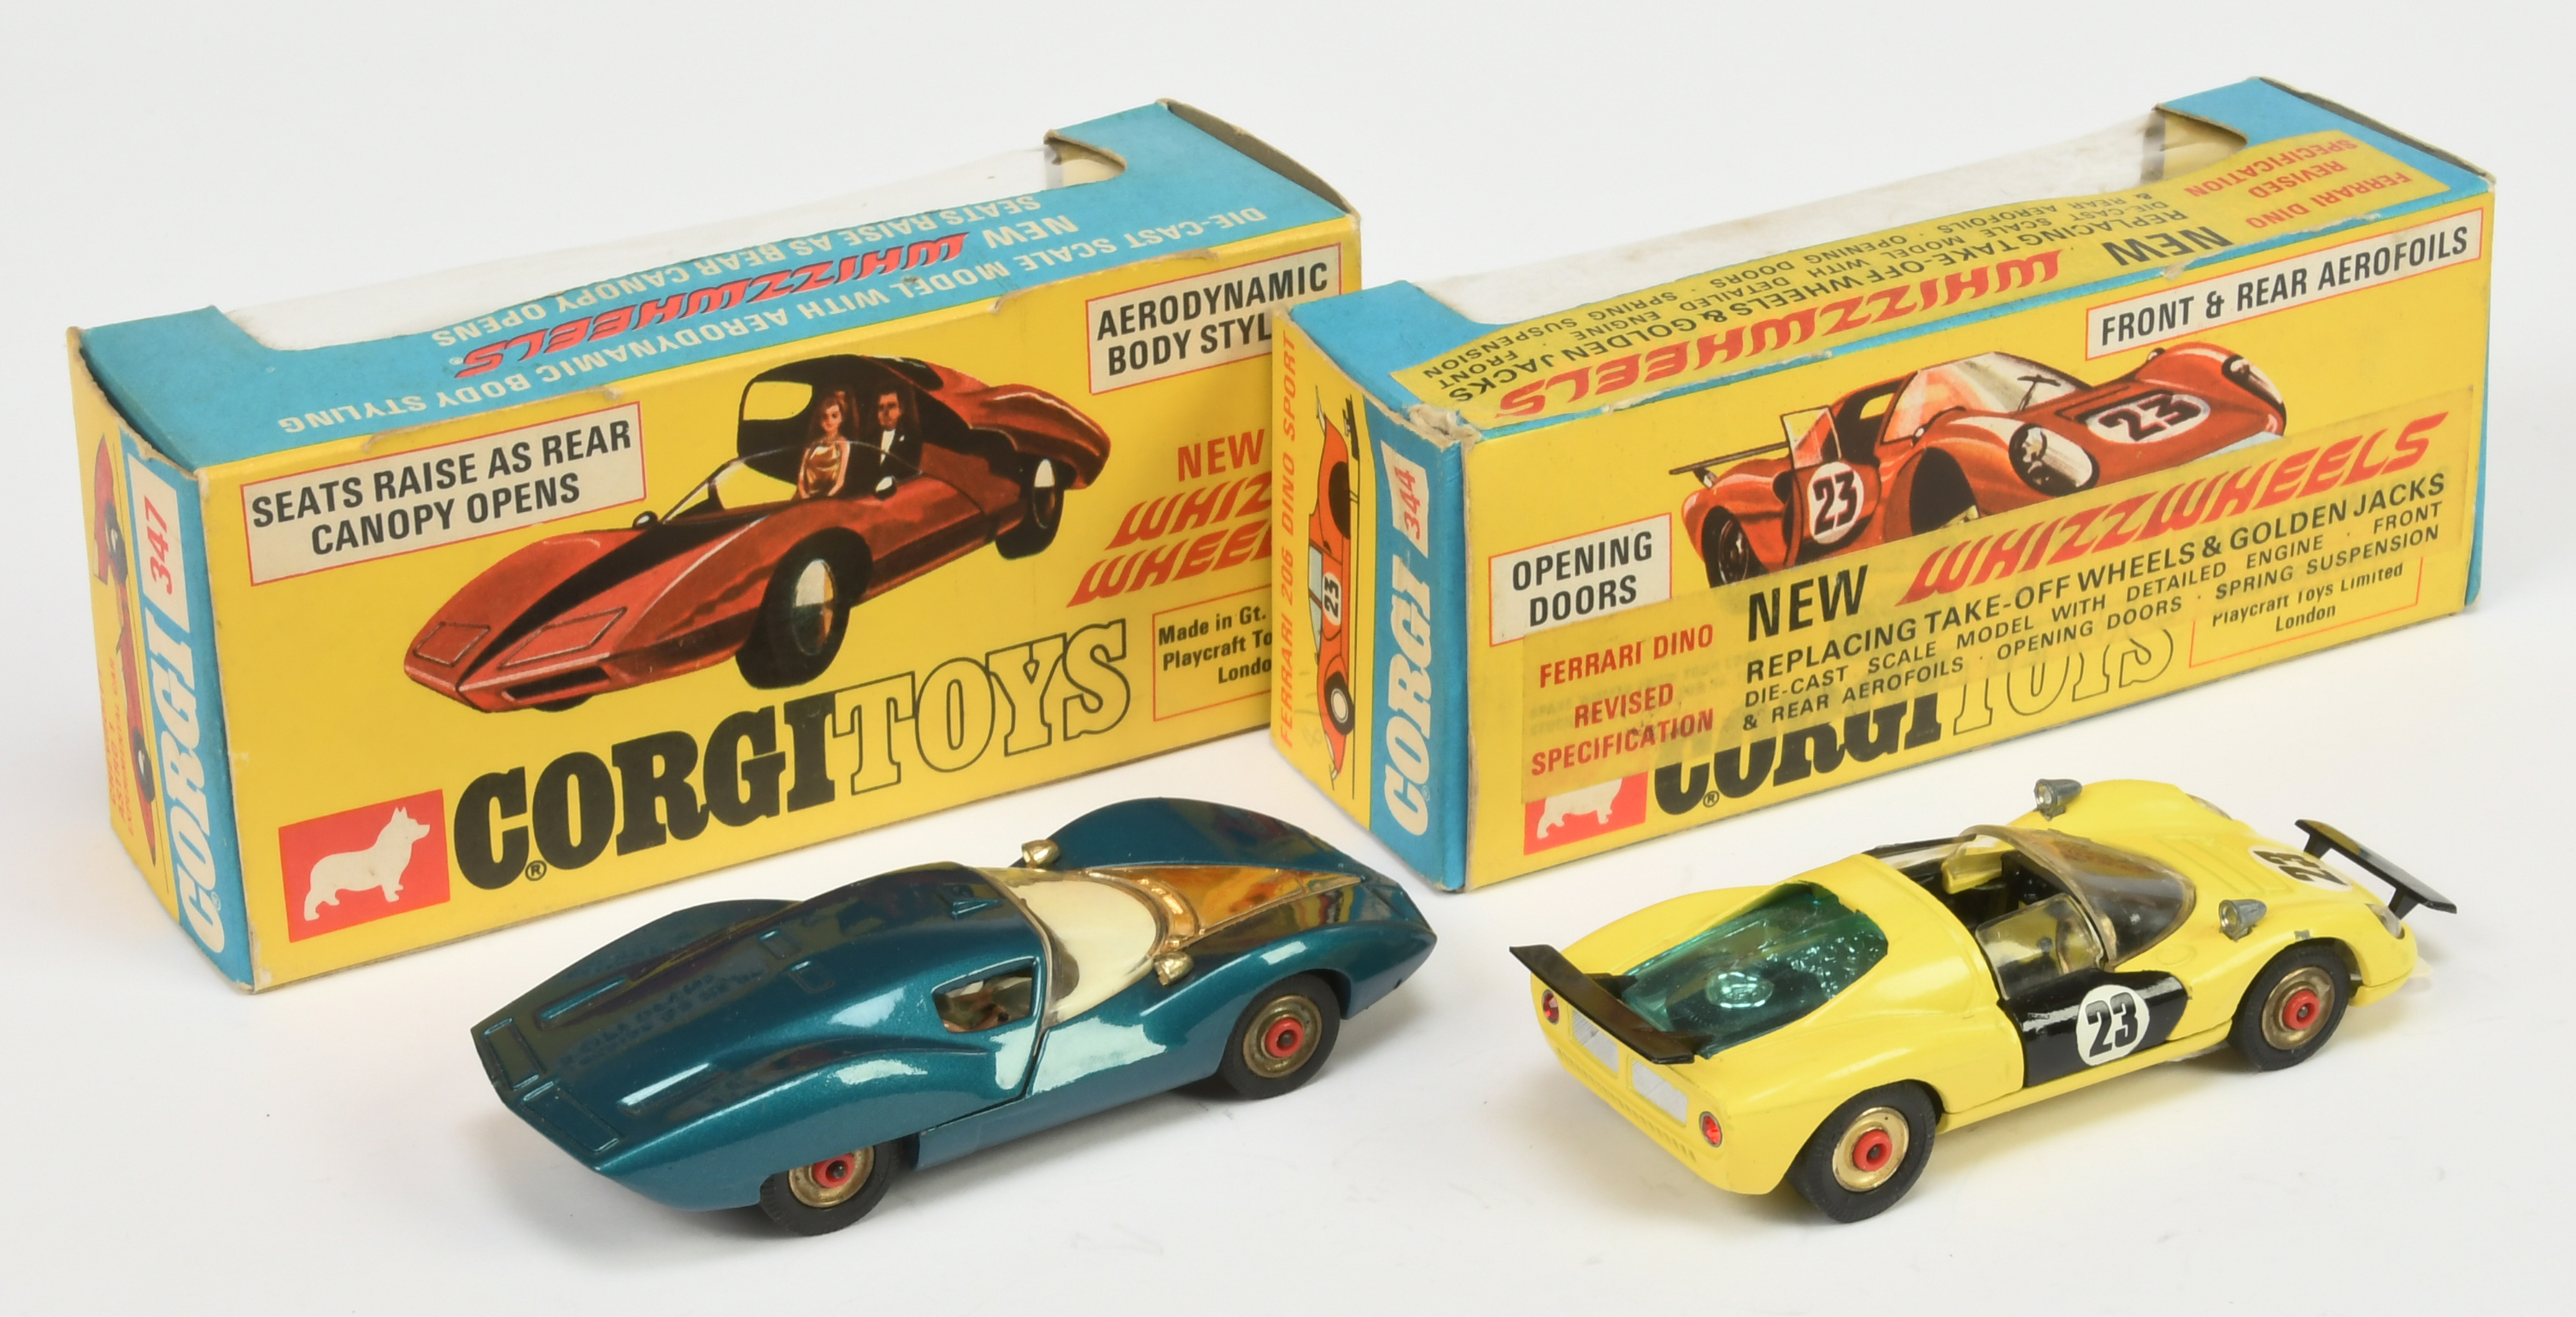 Corgi Toys Whizzwheels 344 Ferrari 206 Dino Sport - Yellow body, black doors and interior, racing... - Image 2 of 2